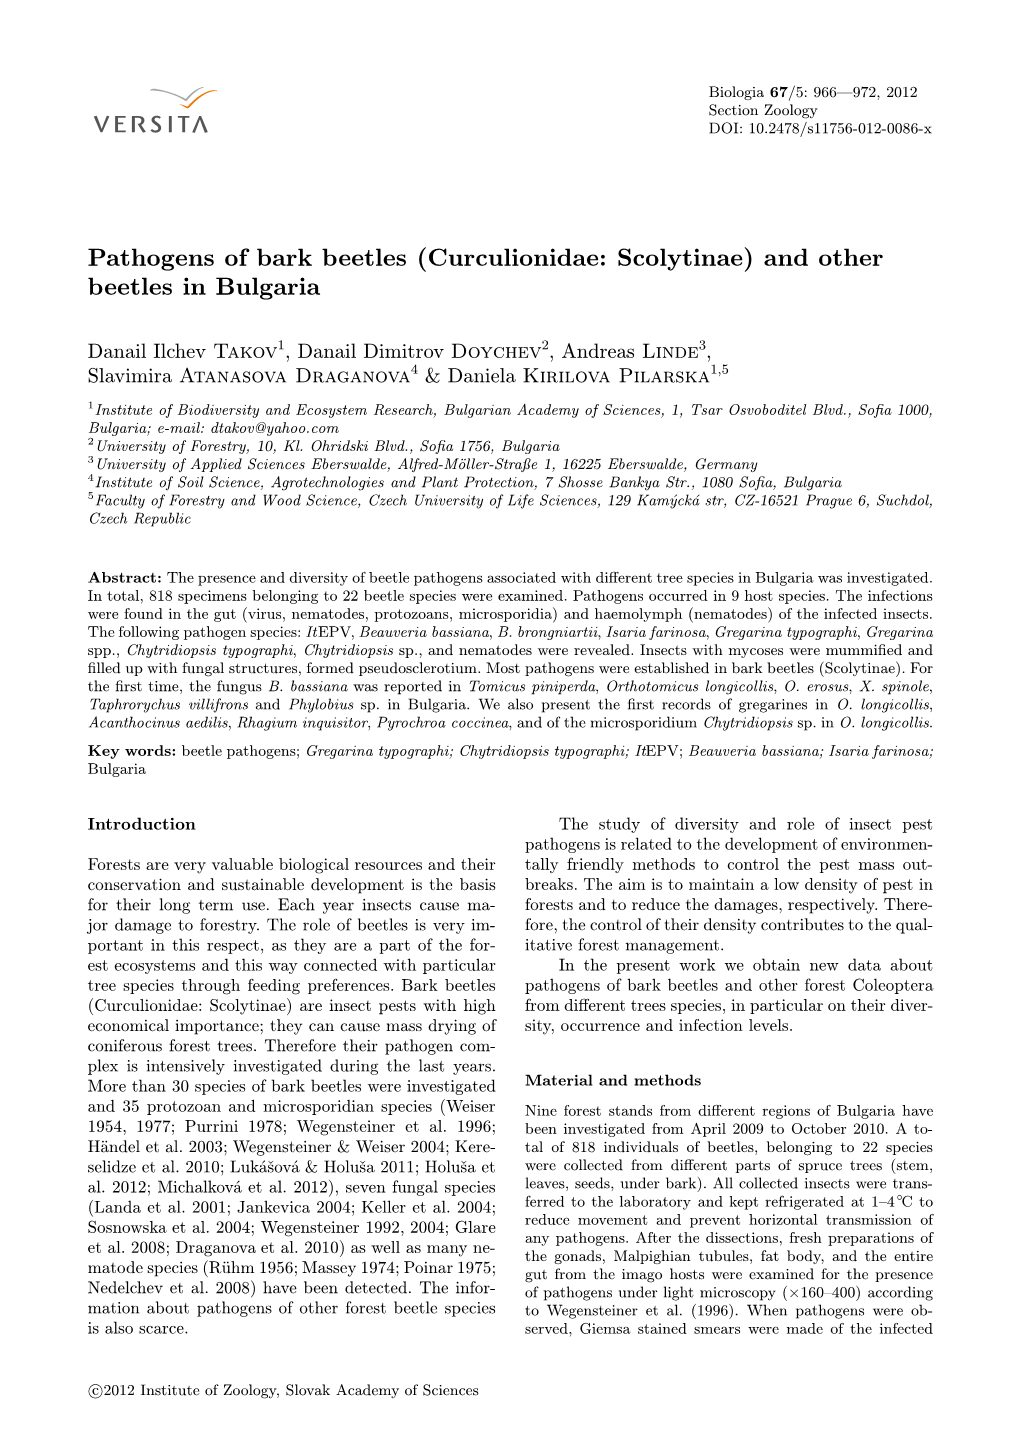 Pathogens of Bark Beetles (Curculionidae: Scolytinae) and Other Beetles in Bulgaria